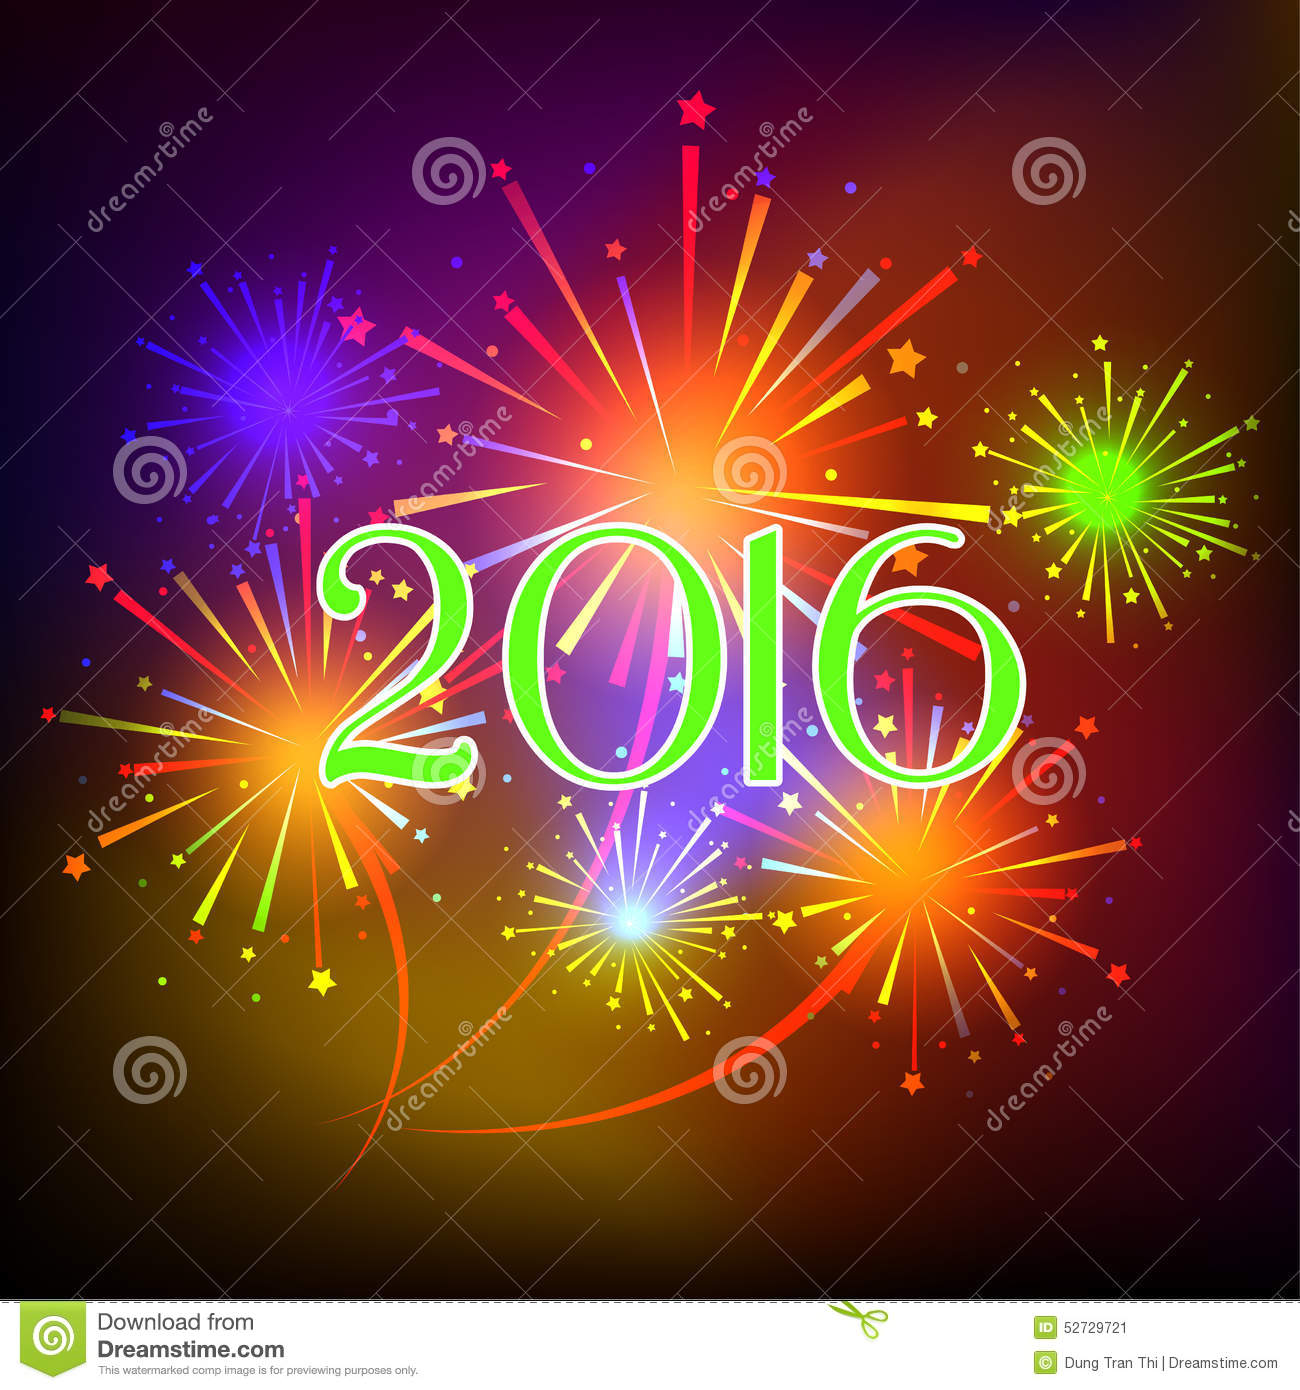 Happy New Year 2016 Image Free HD Wallpaper 17356 Wallpaper computer